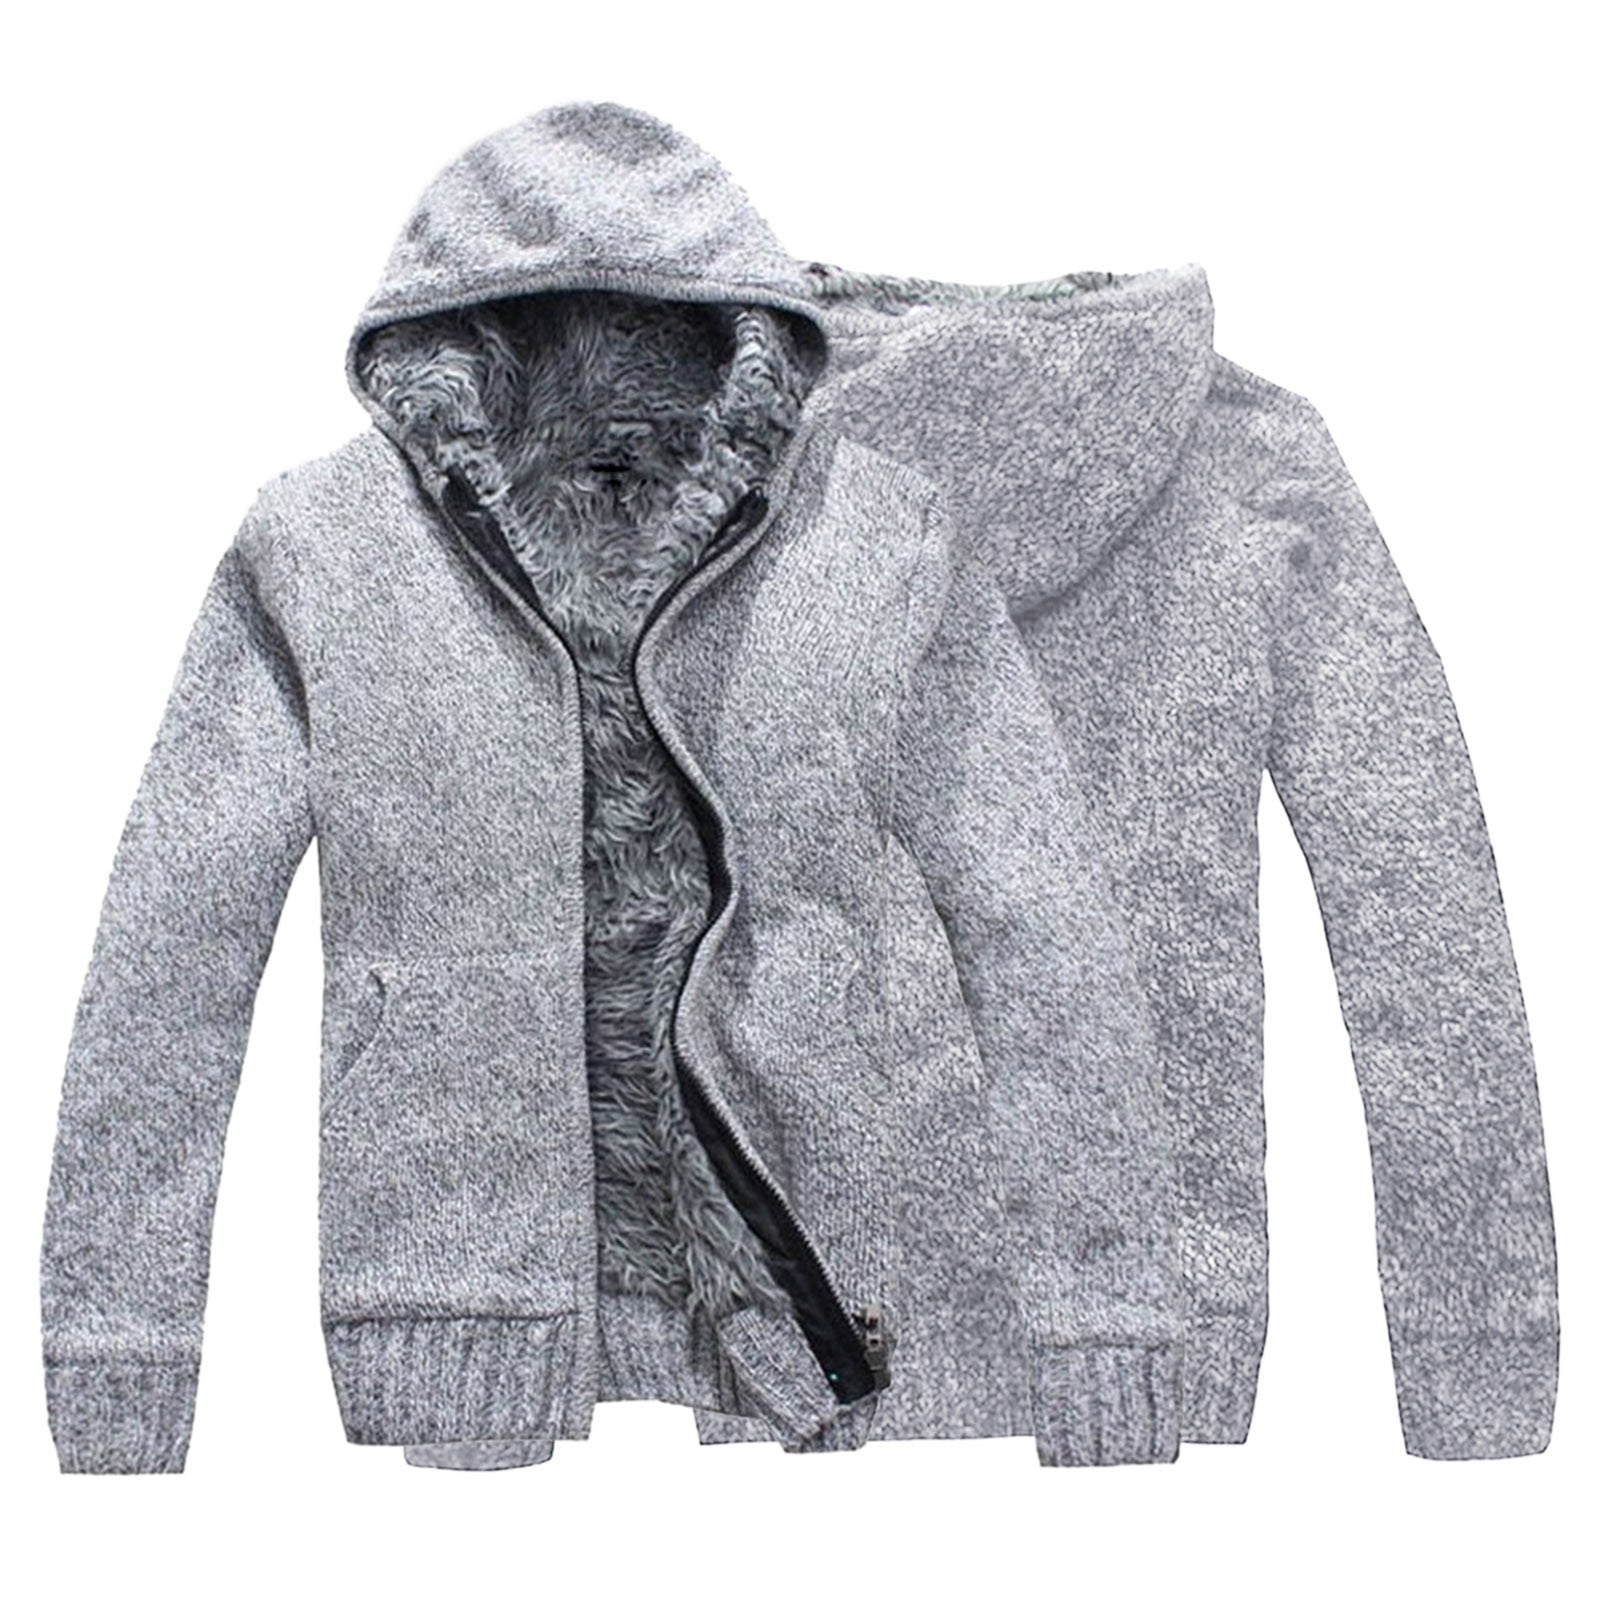 Men's Coat Fashion Autumn Winter Hoodie Sweatshirt Long Sleeve